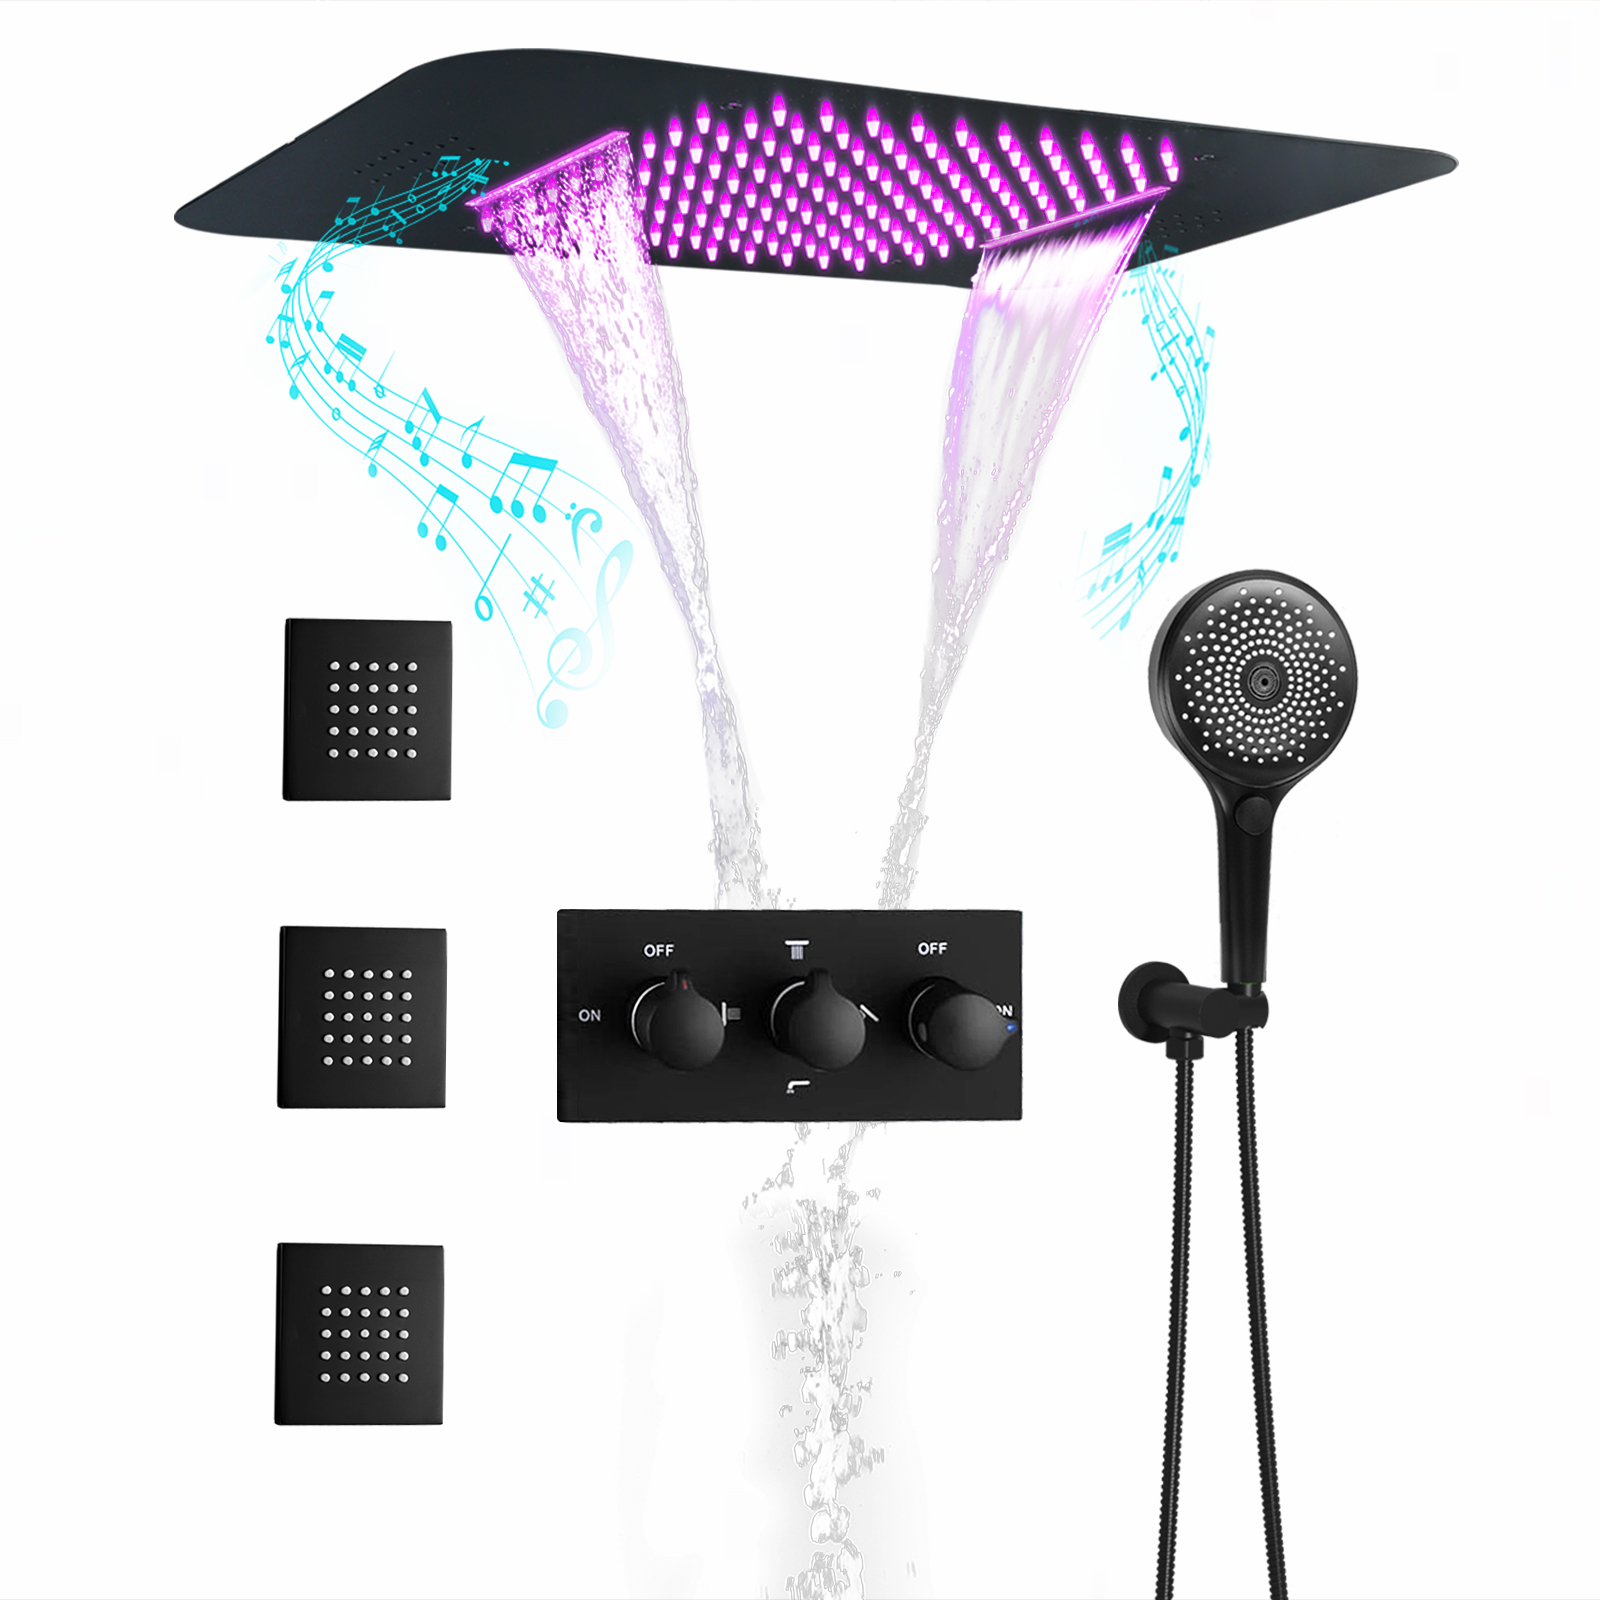 Ducky preto escuro banheiro led música chuva sistema cascata de água temperatura constante misturado chuveiro sistema torneira água jet kit